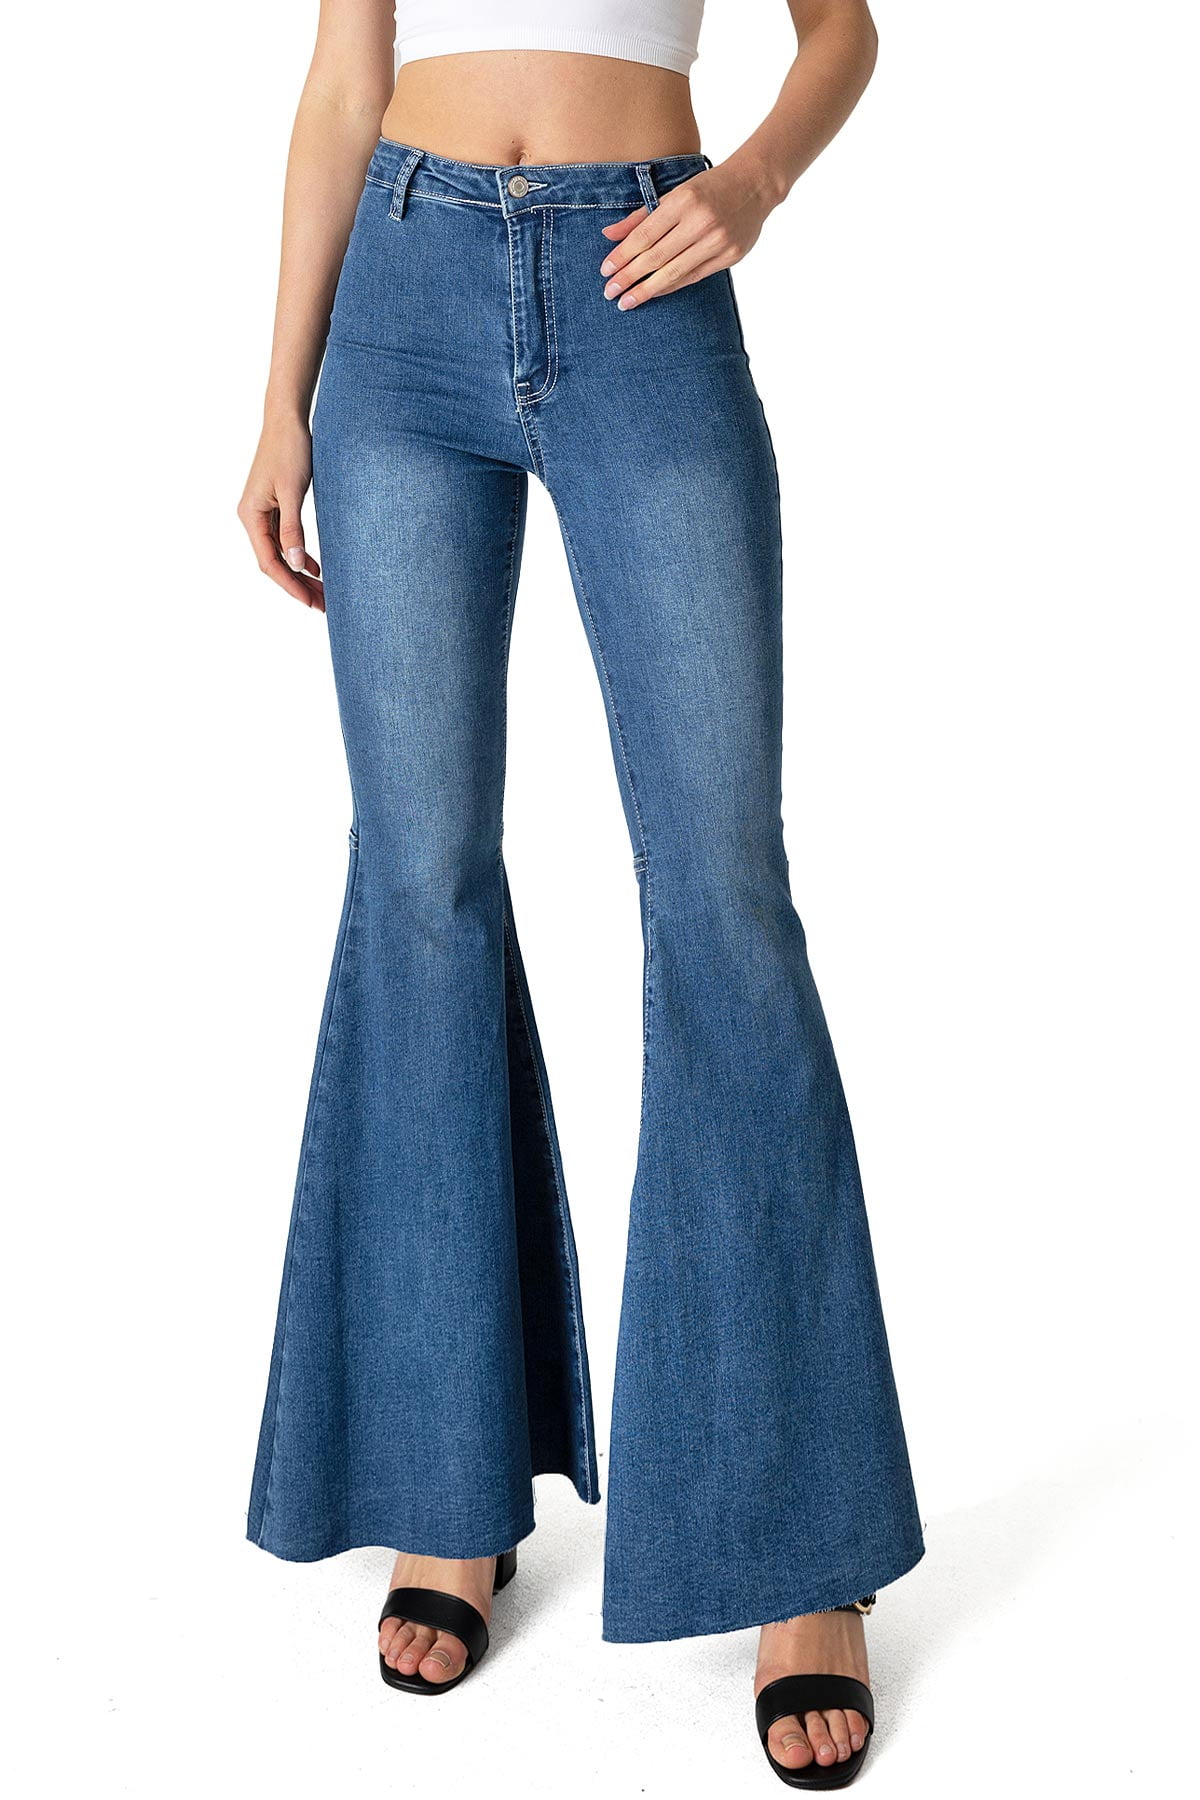 Tricot Womens High Rise Super Flare Bell Bottom Jeans (11, Medium Denim) 